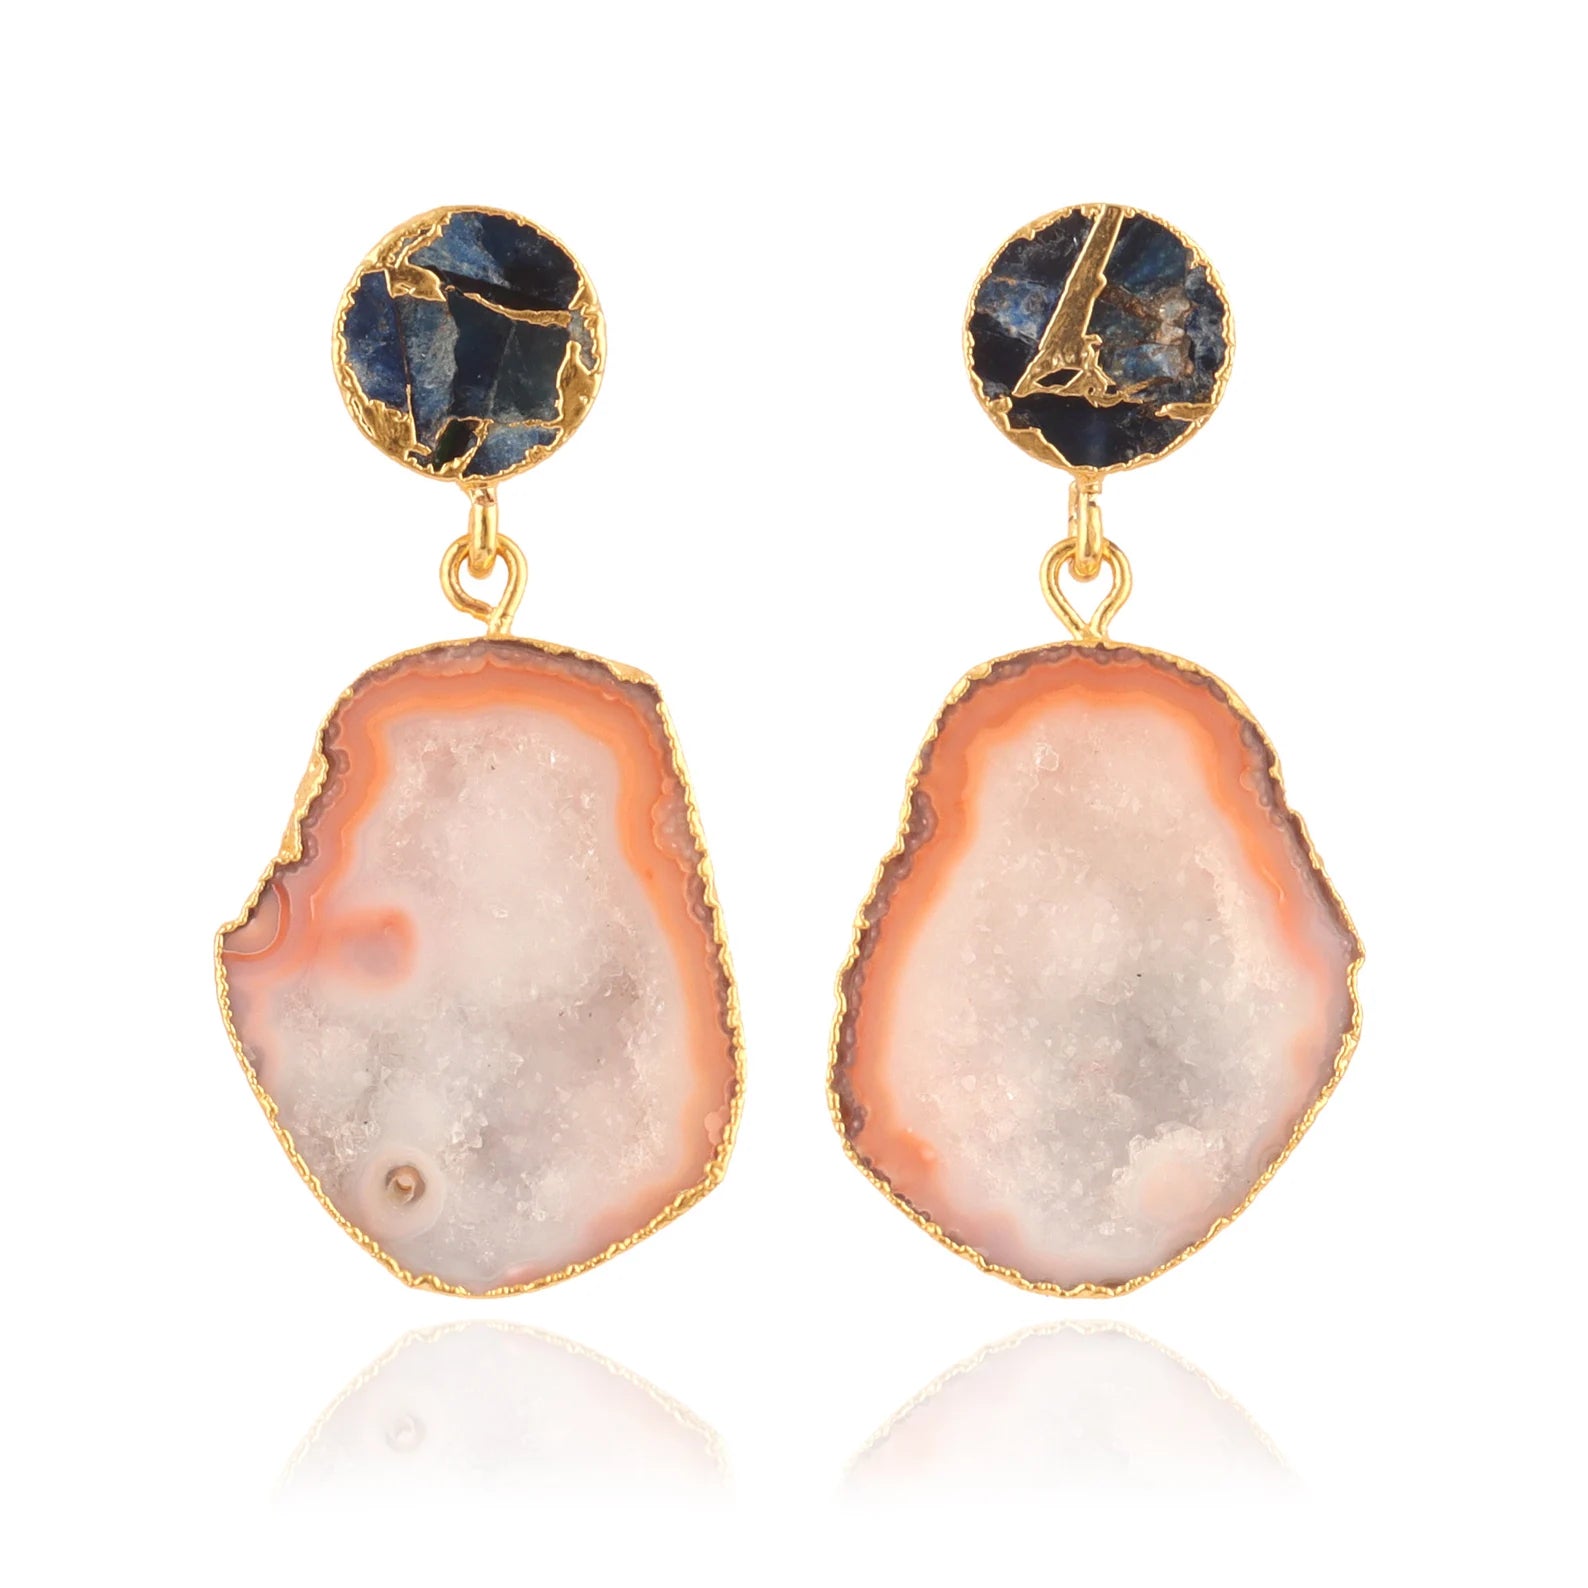 Peach and Navy Falling Rocks Earrings